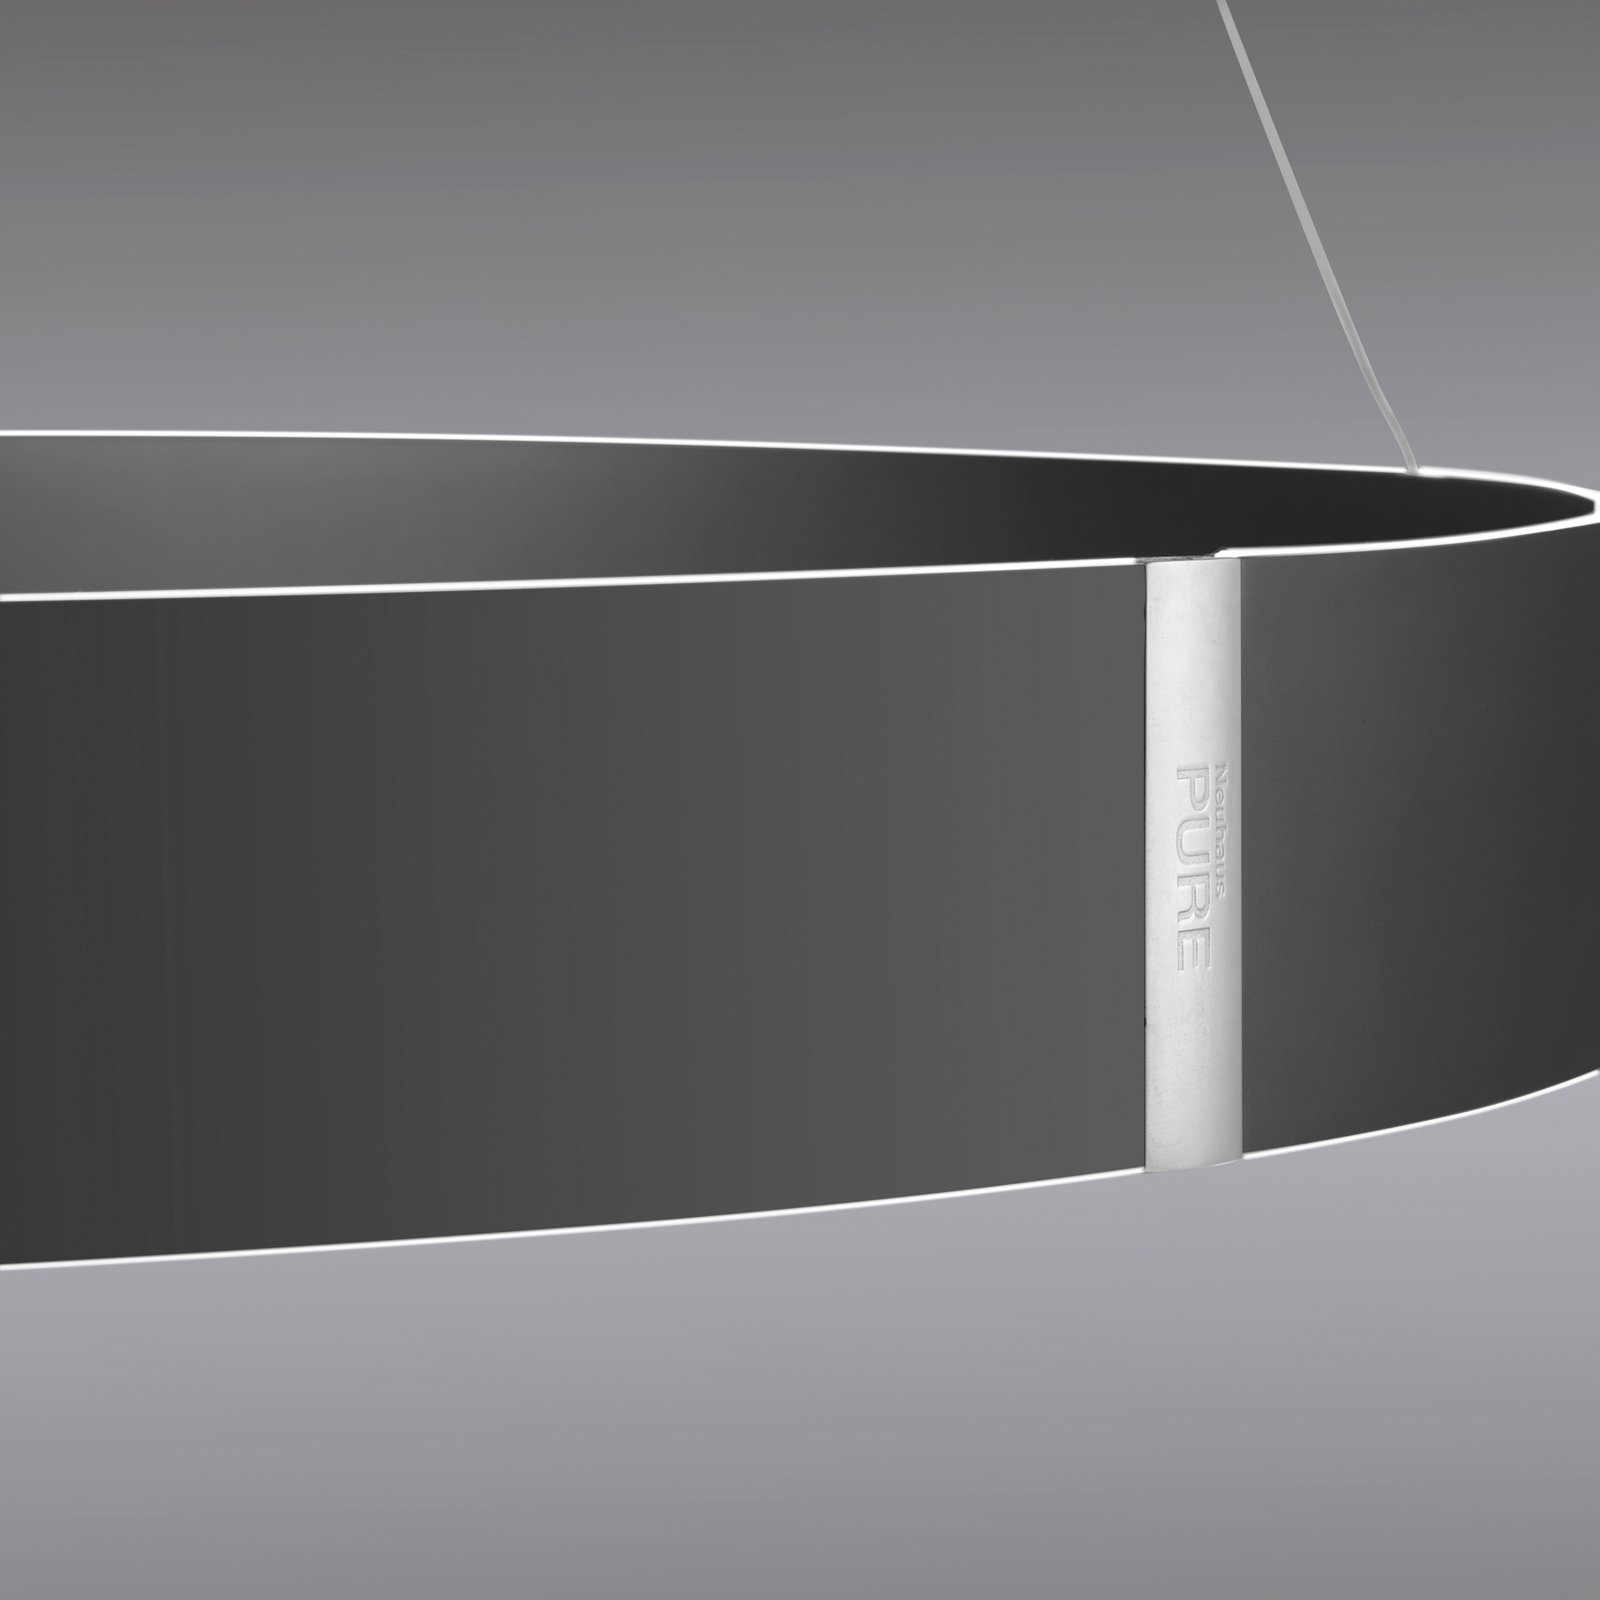 Pure E-Clipse LED hanglamp, CCT, grijs